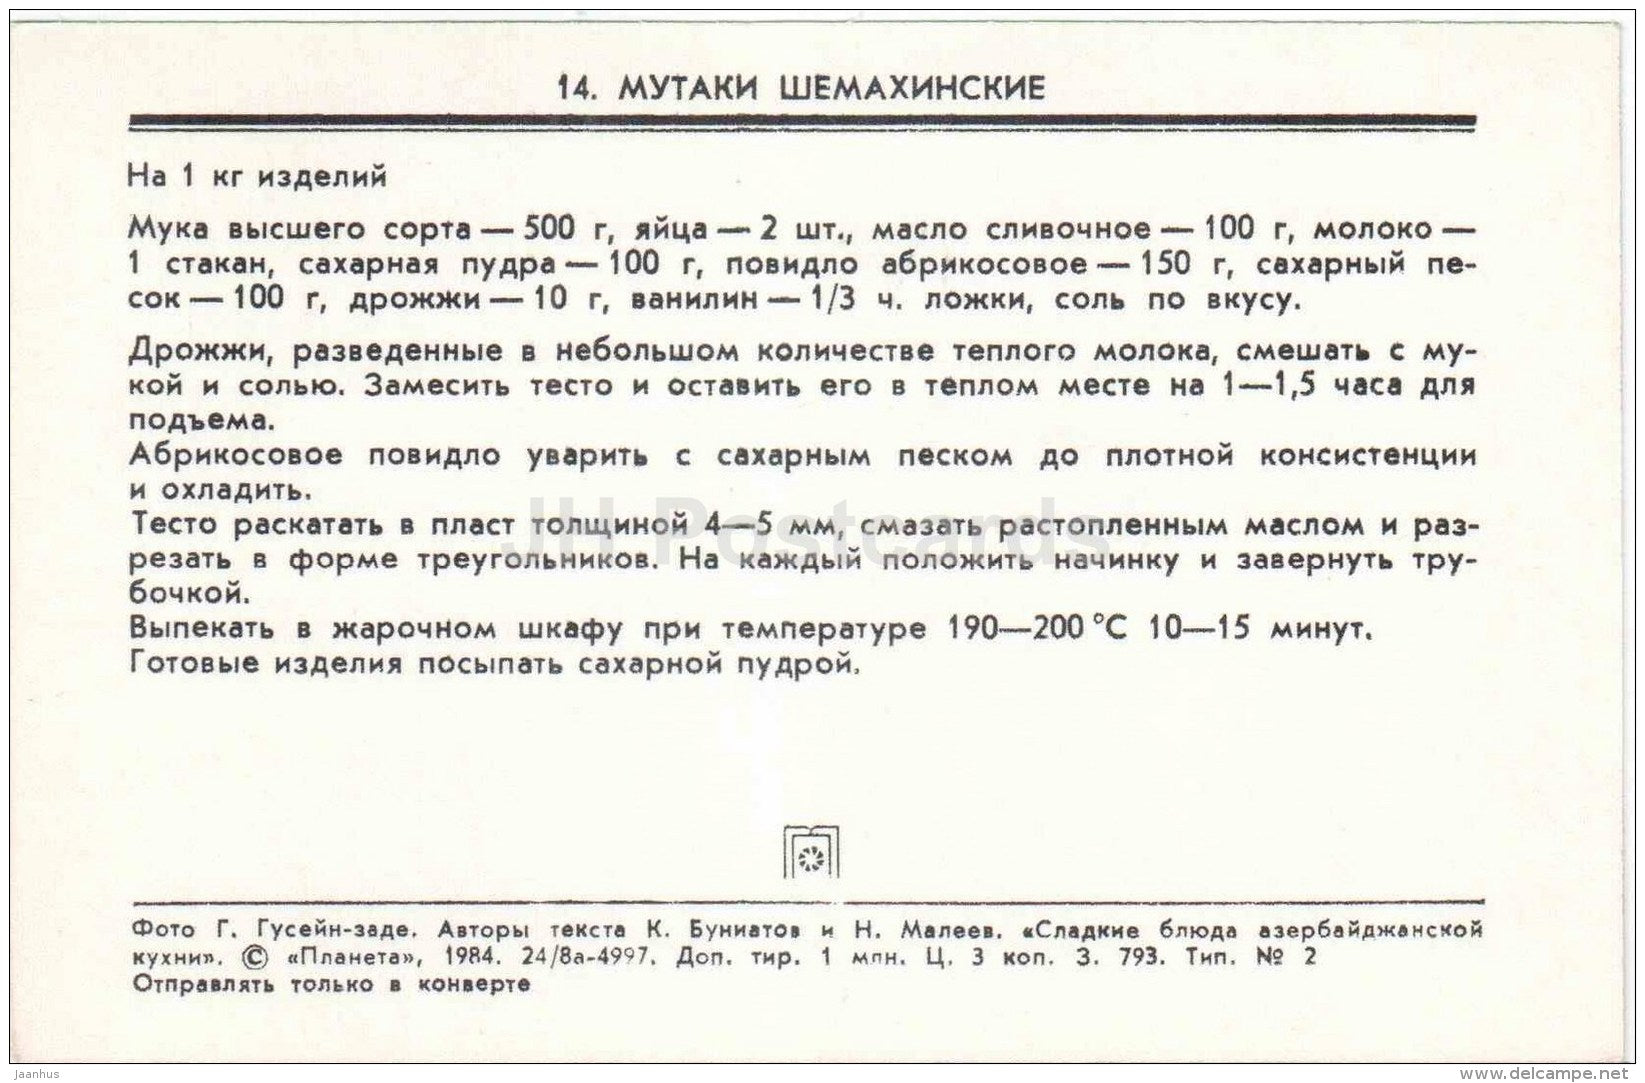 Mutaki pastry - dishes - Azerbaijan dessert - cuisine - 1984 - Russia USSR - unused - JH Postcards